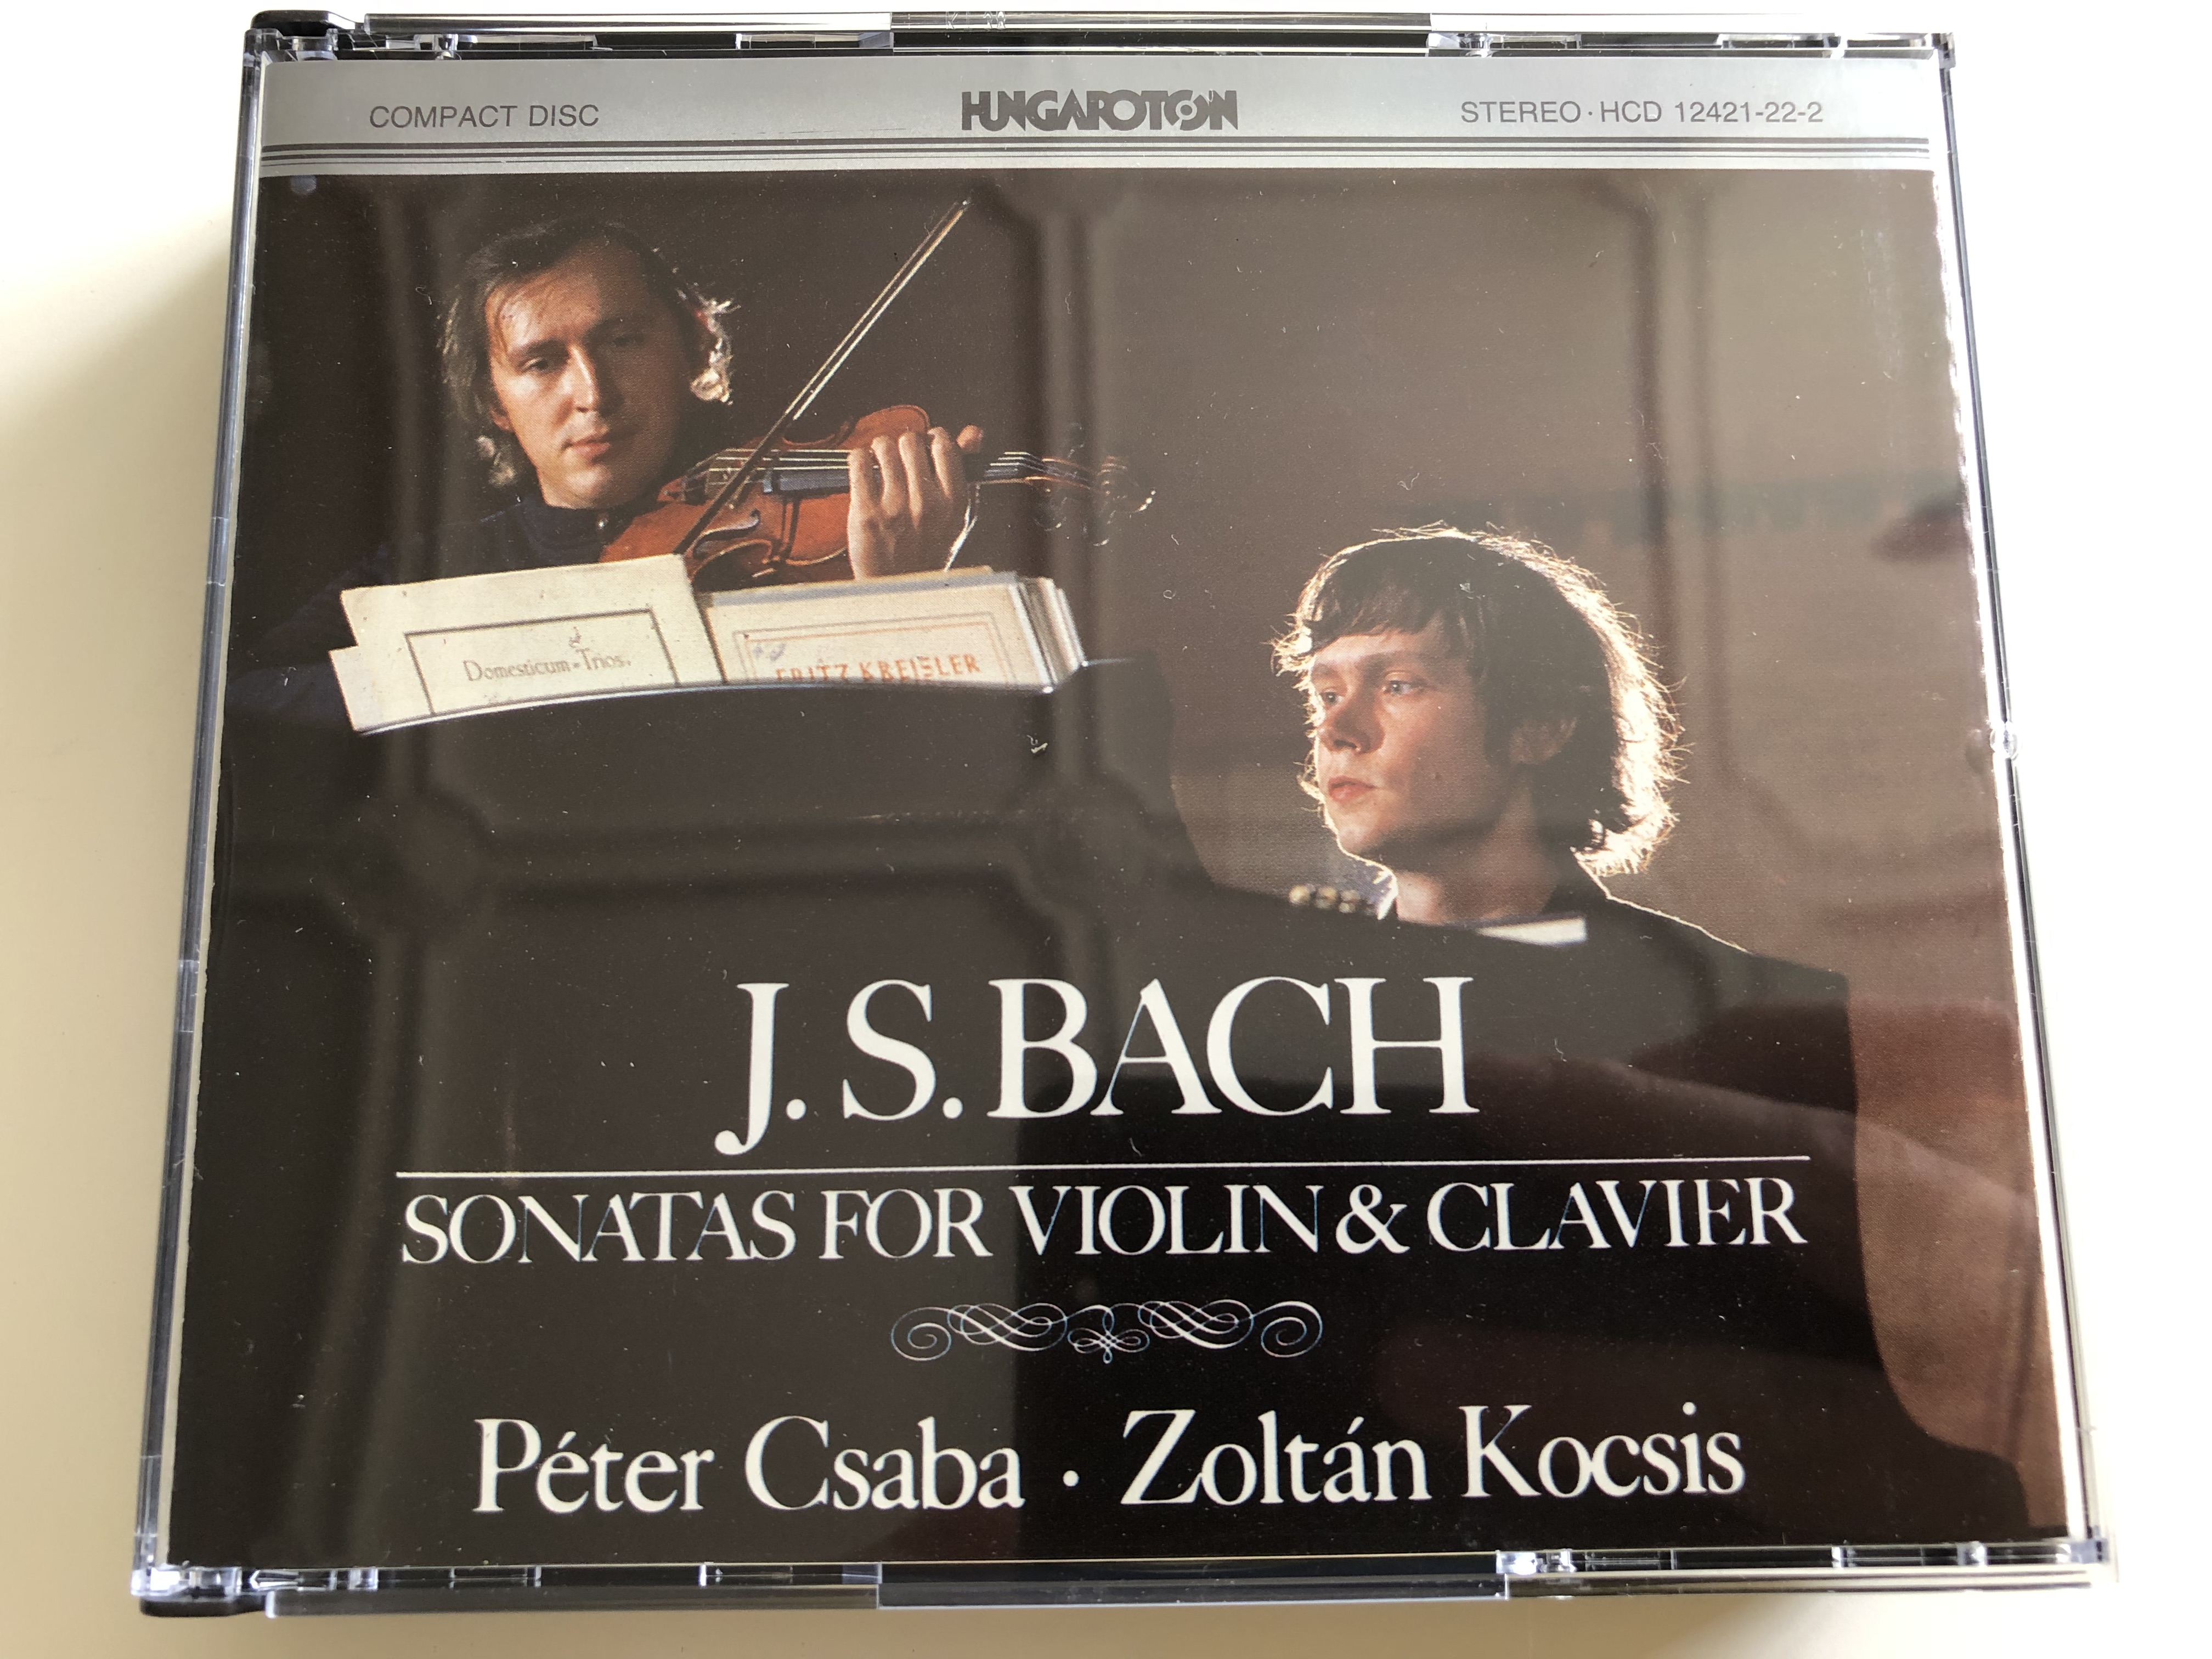 johann-sebastian-bach-sonatas-for-violin-clavier-2x-audio-cd-p-ter-csaba-violin-zolt-n-kocsis-piano-hungaroton-hcd-12421-22-2-1-.jpg